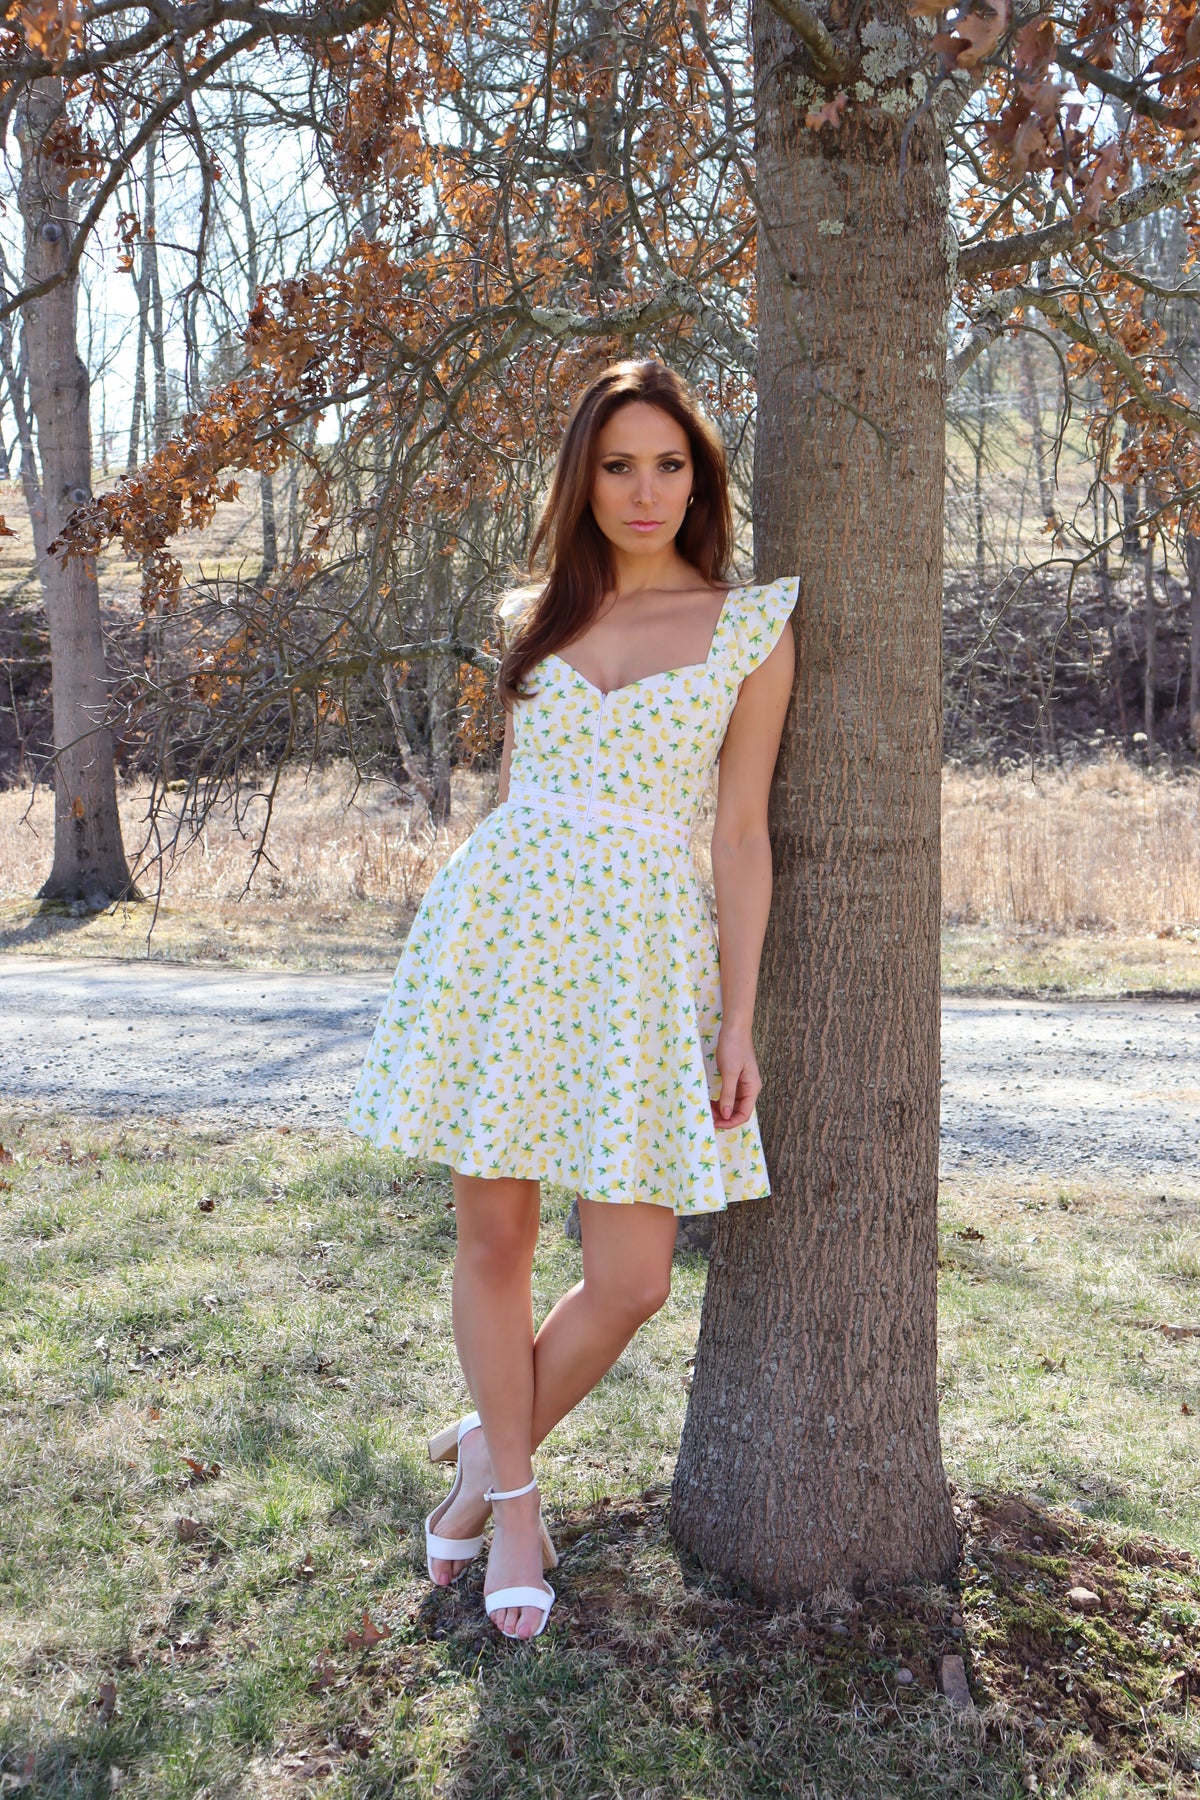 Model in lemon print dress posing next to a tree.